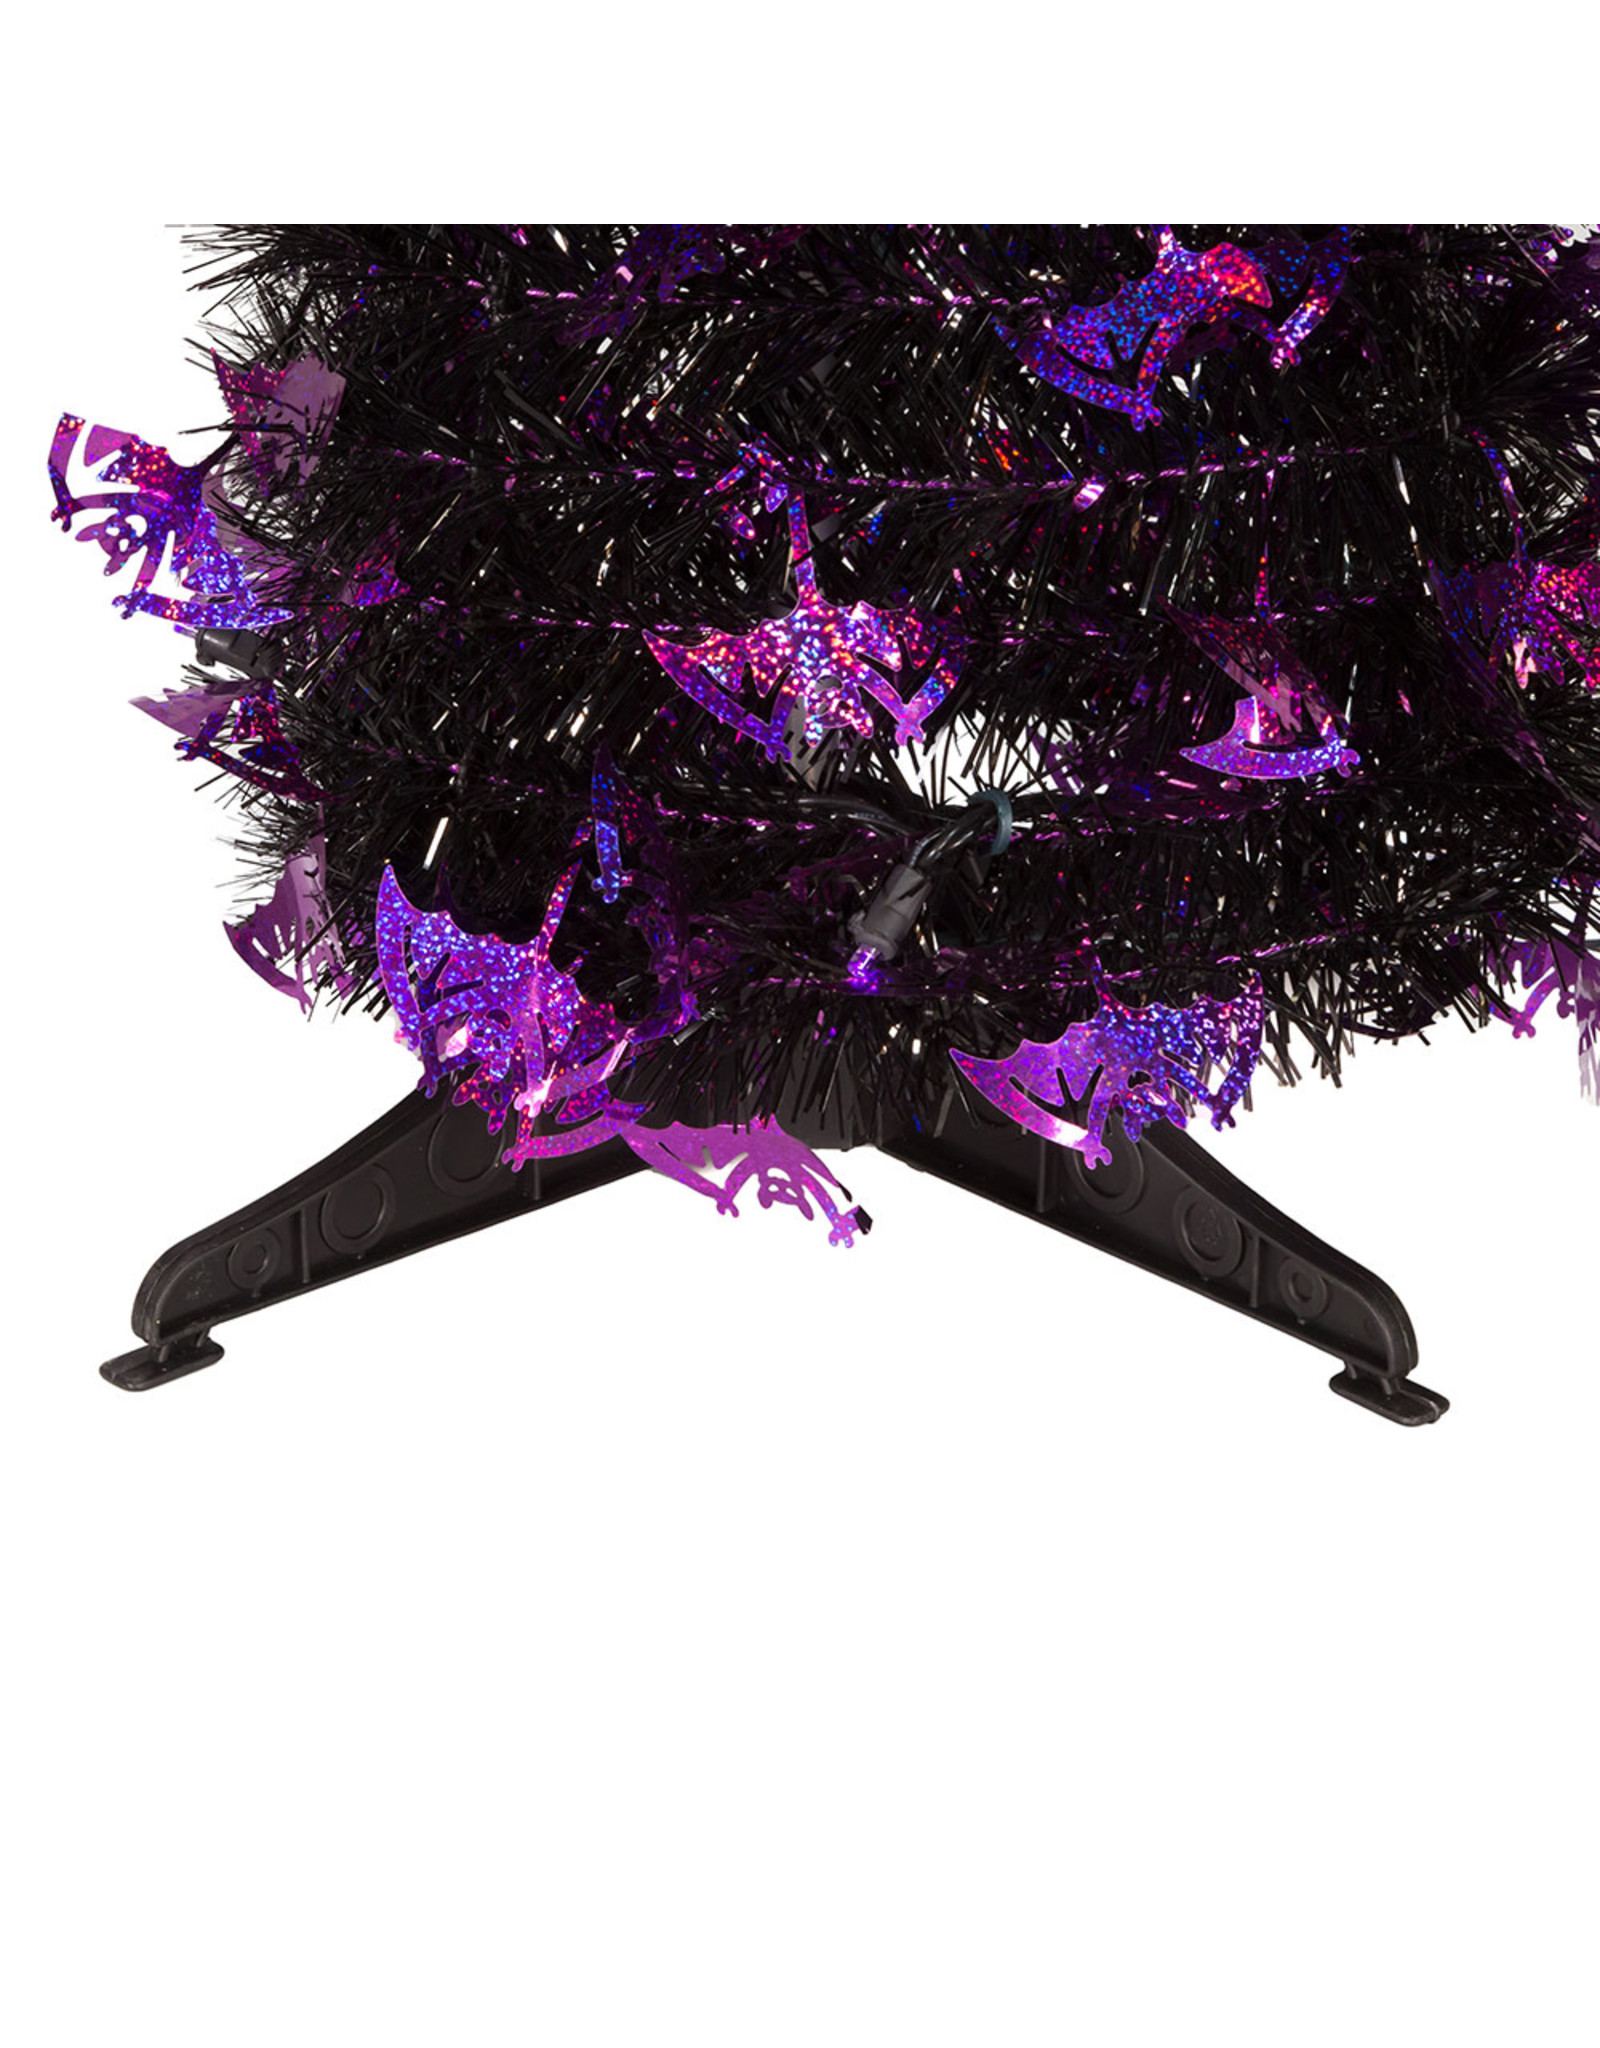 Kurt Adler Lit Purple Black LED Collapsible Halloween Tree 5.5FT